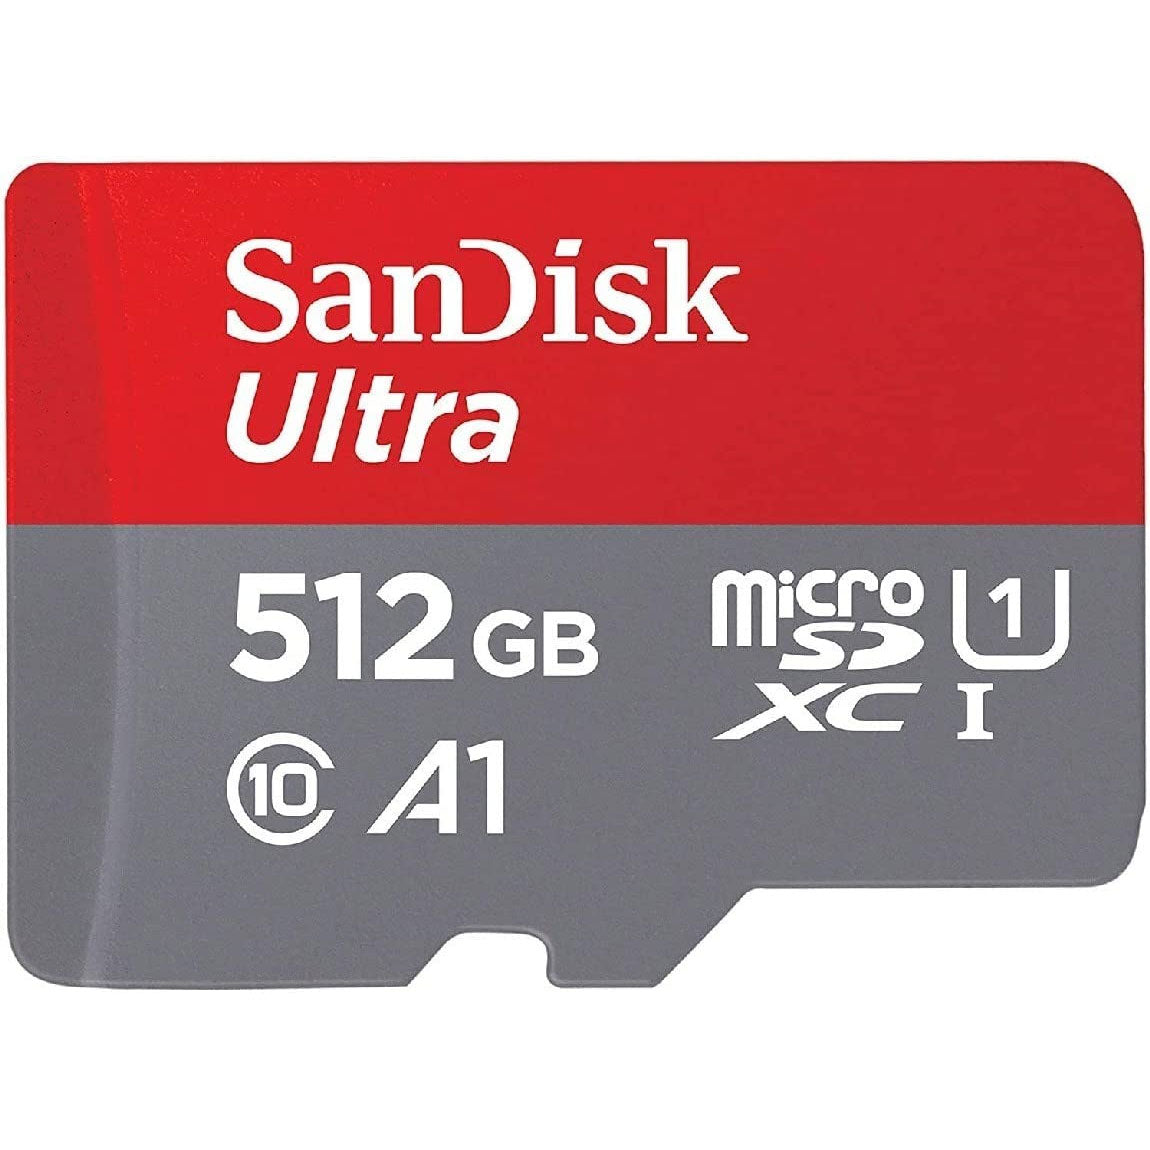 SanDisk 512GB microSDXC Card